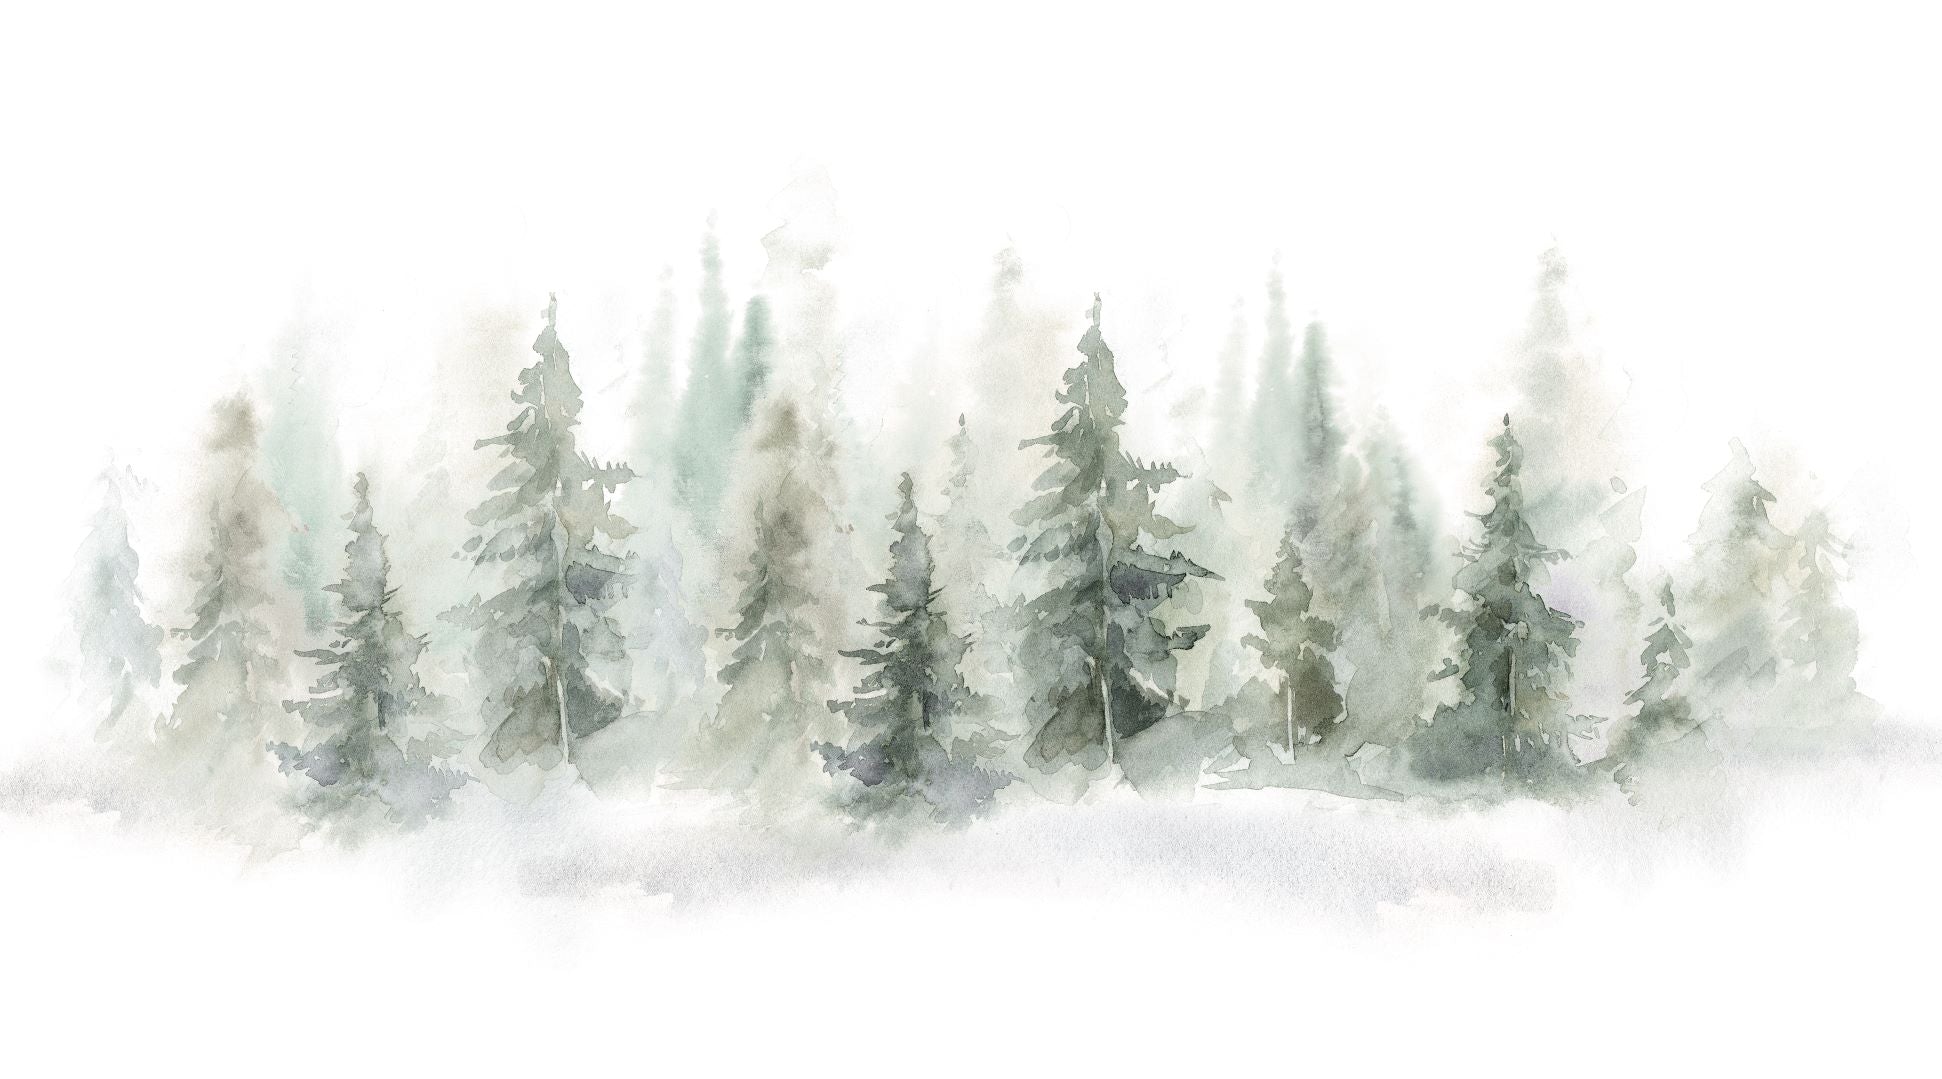 Watercolor Pines